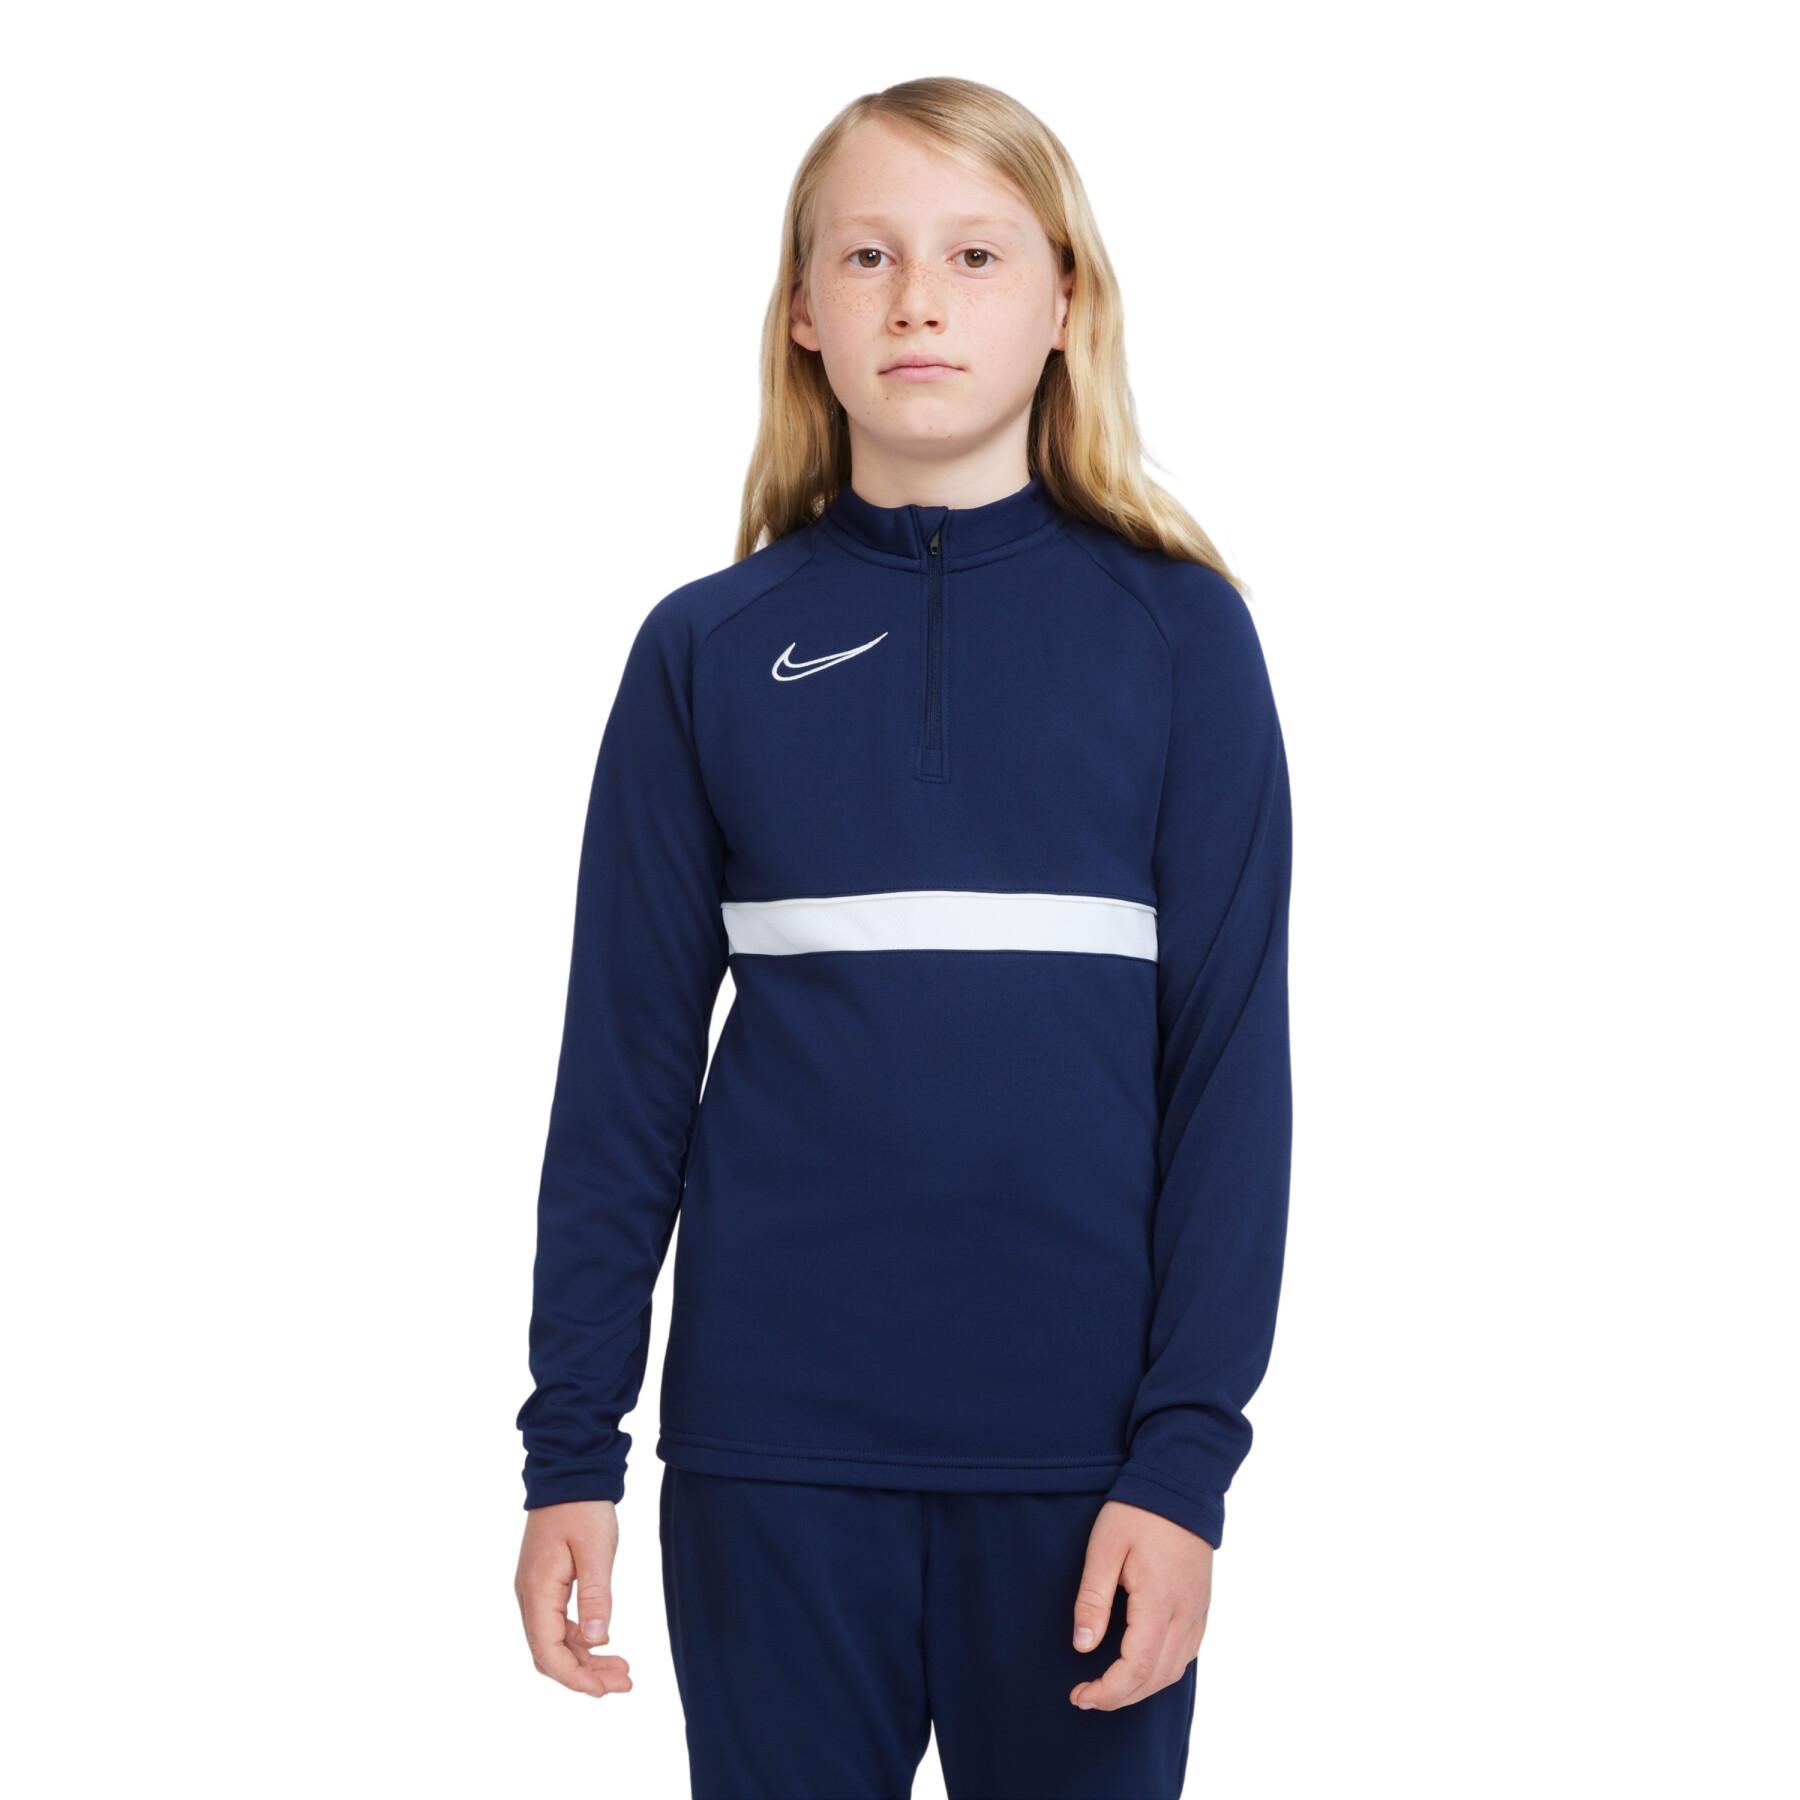 Children's jersey Nike Dri-FIT Academy